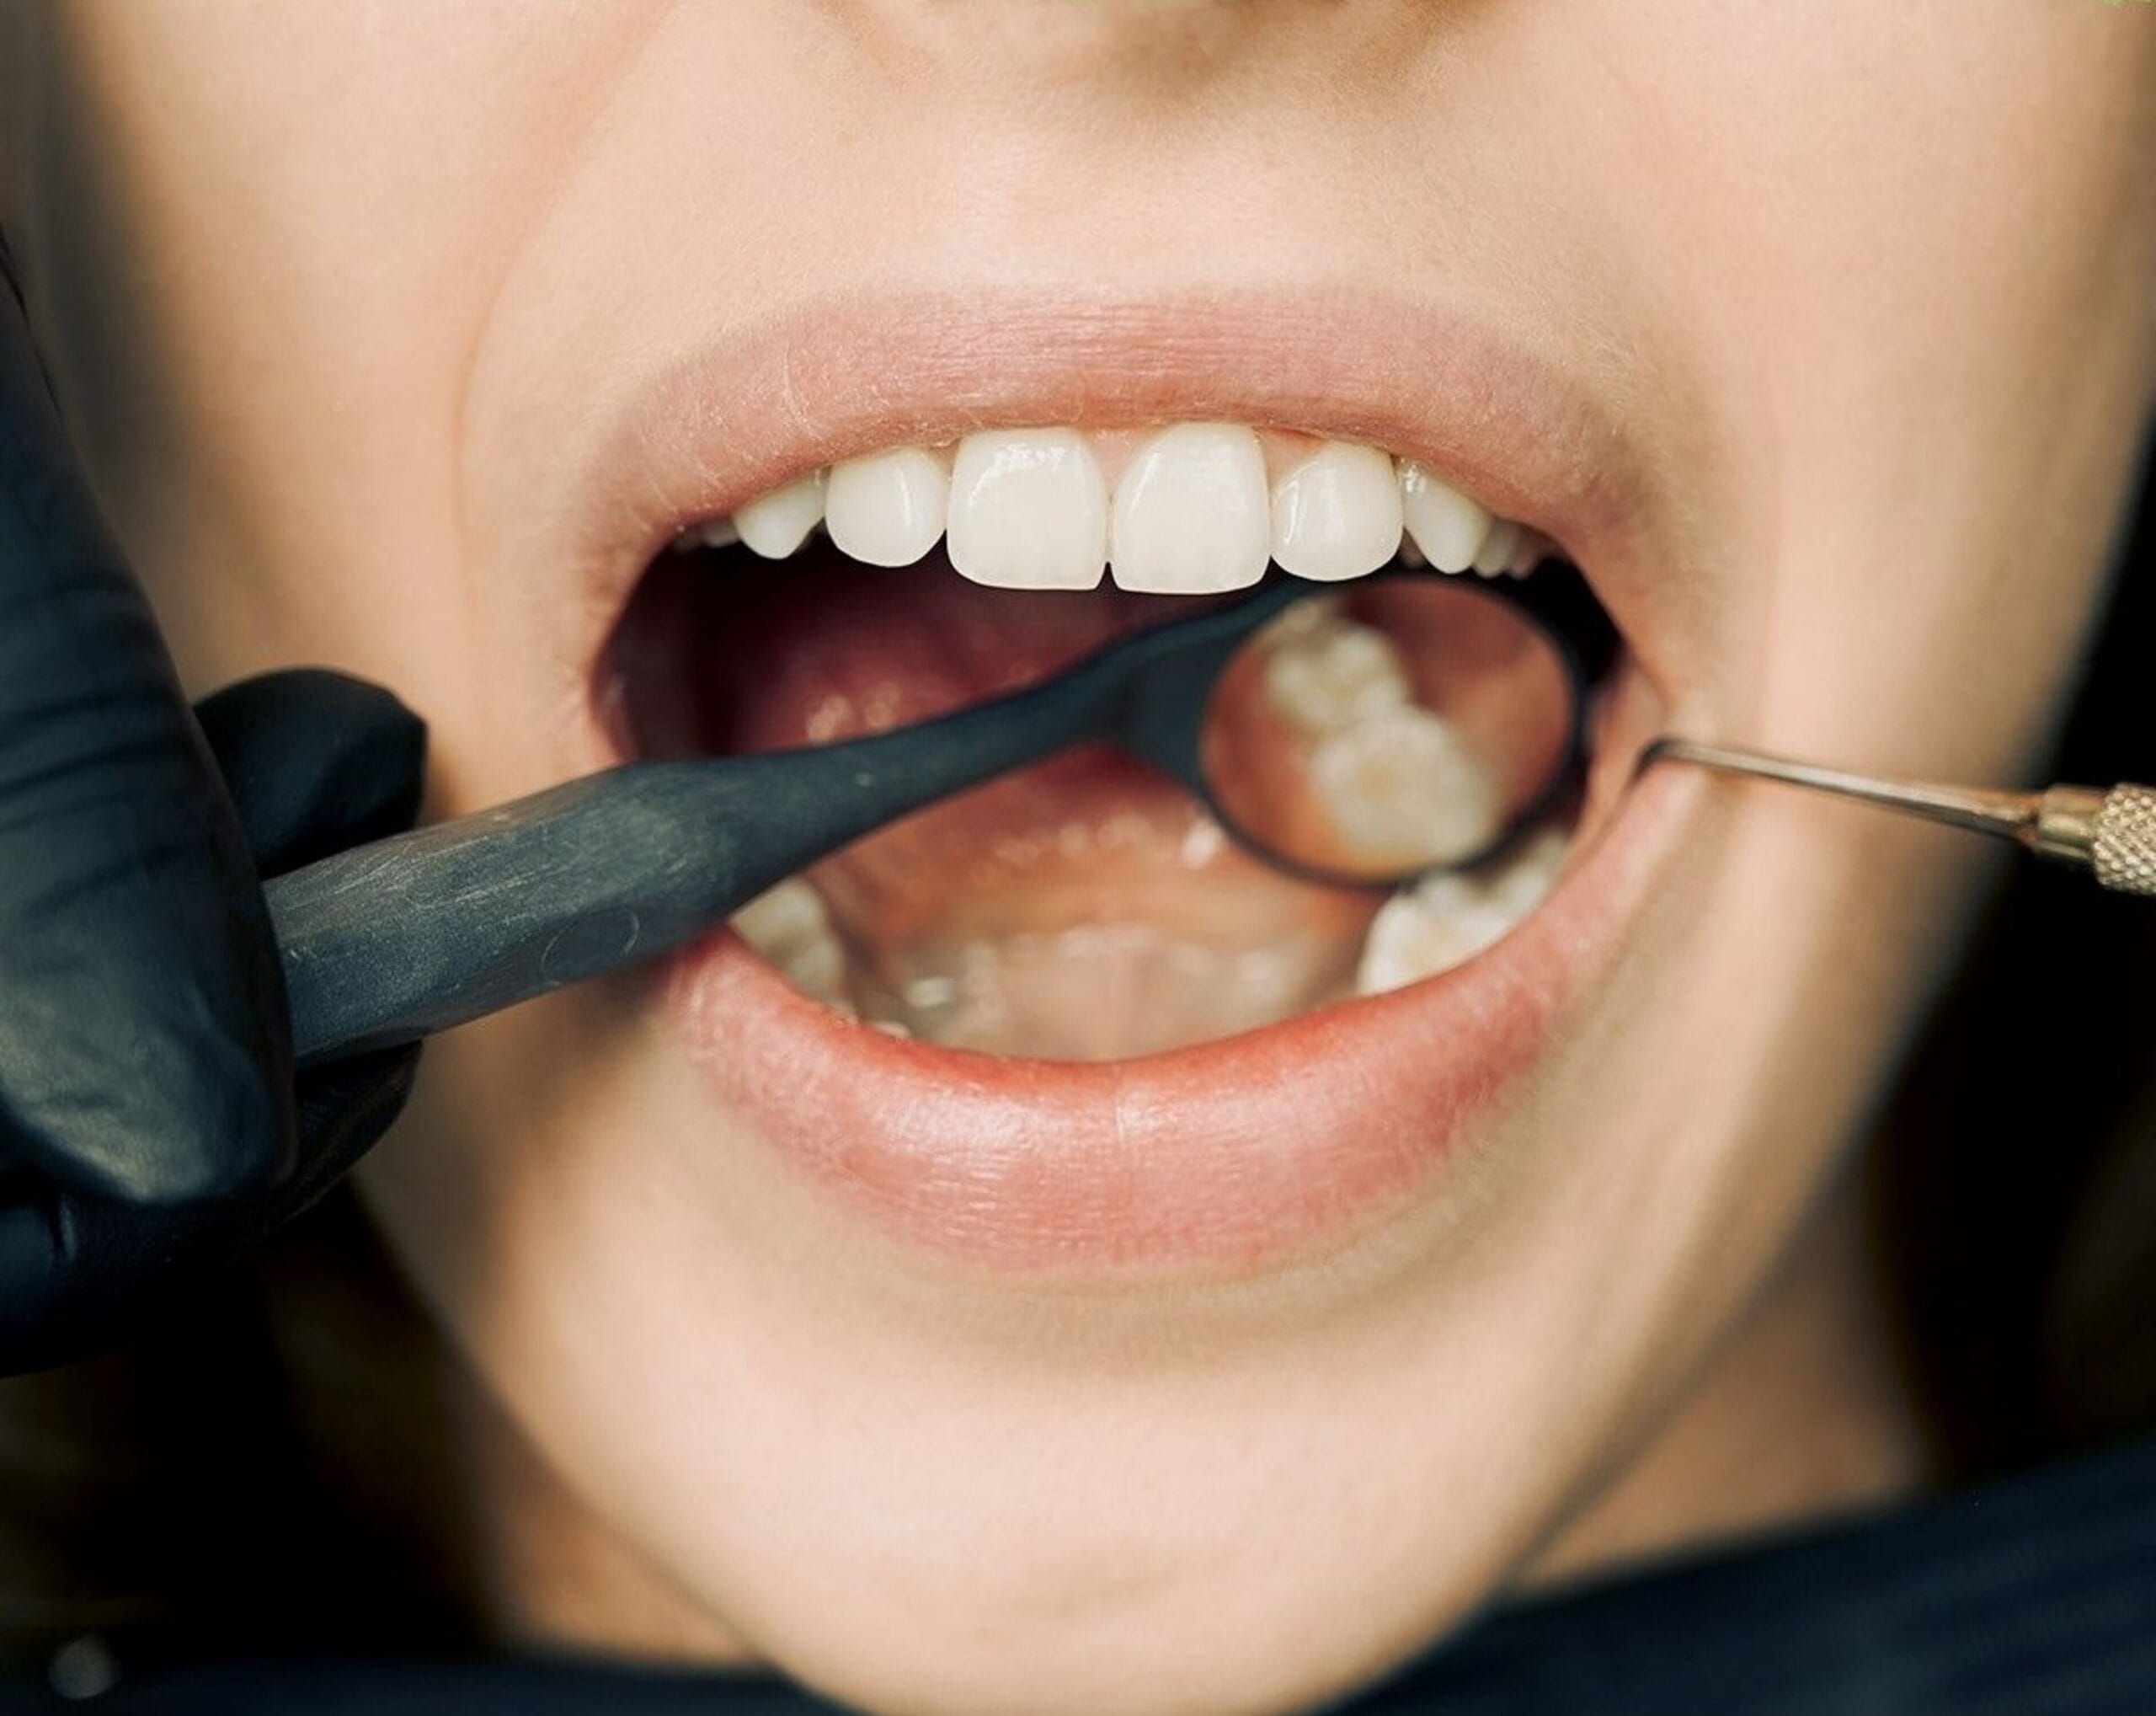 periodontal treatment|periodontal disease|periodontal disease|gum disease treatment|periodontal disease|periodontal disease